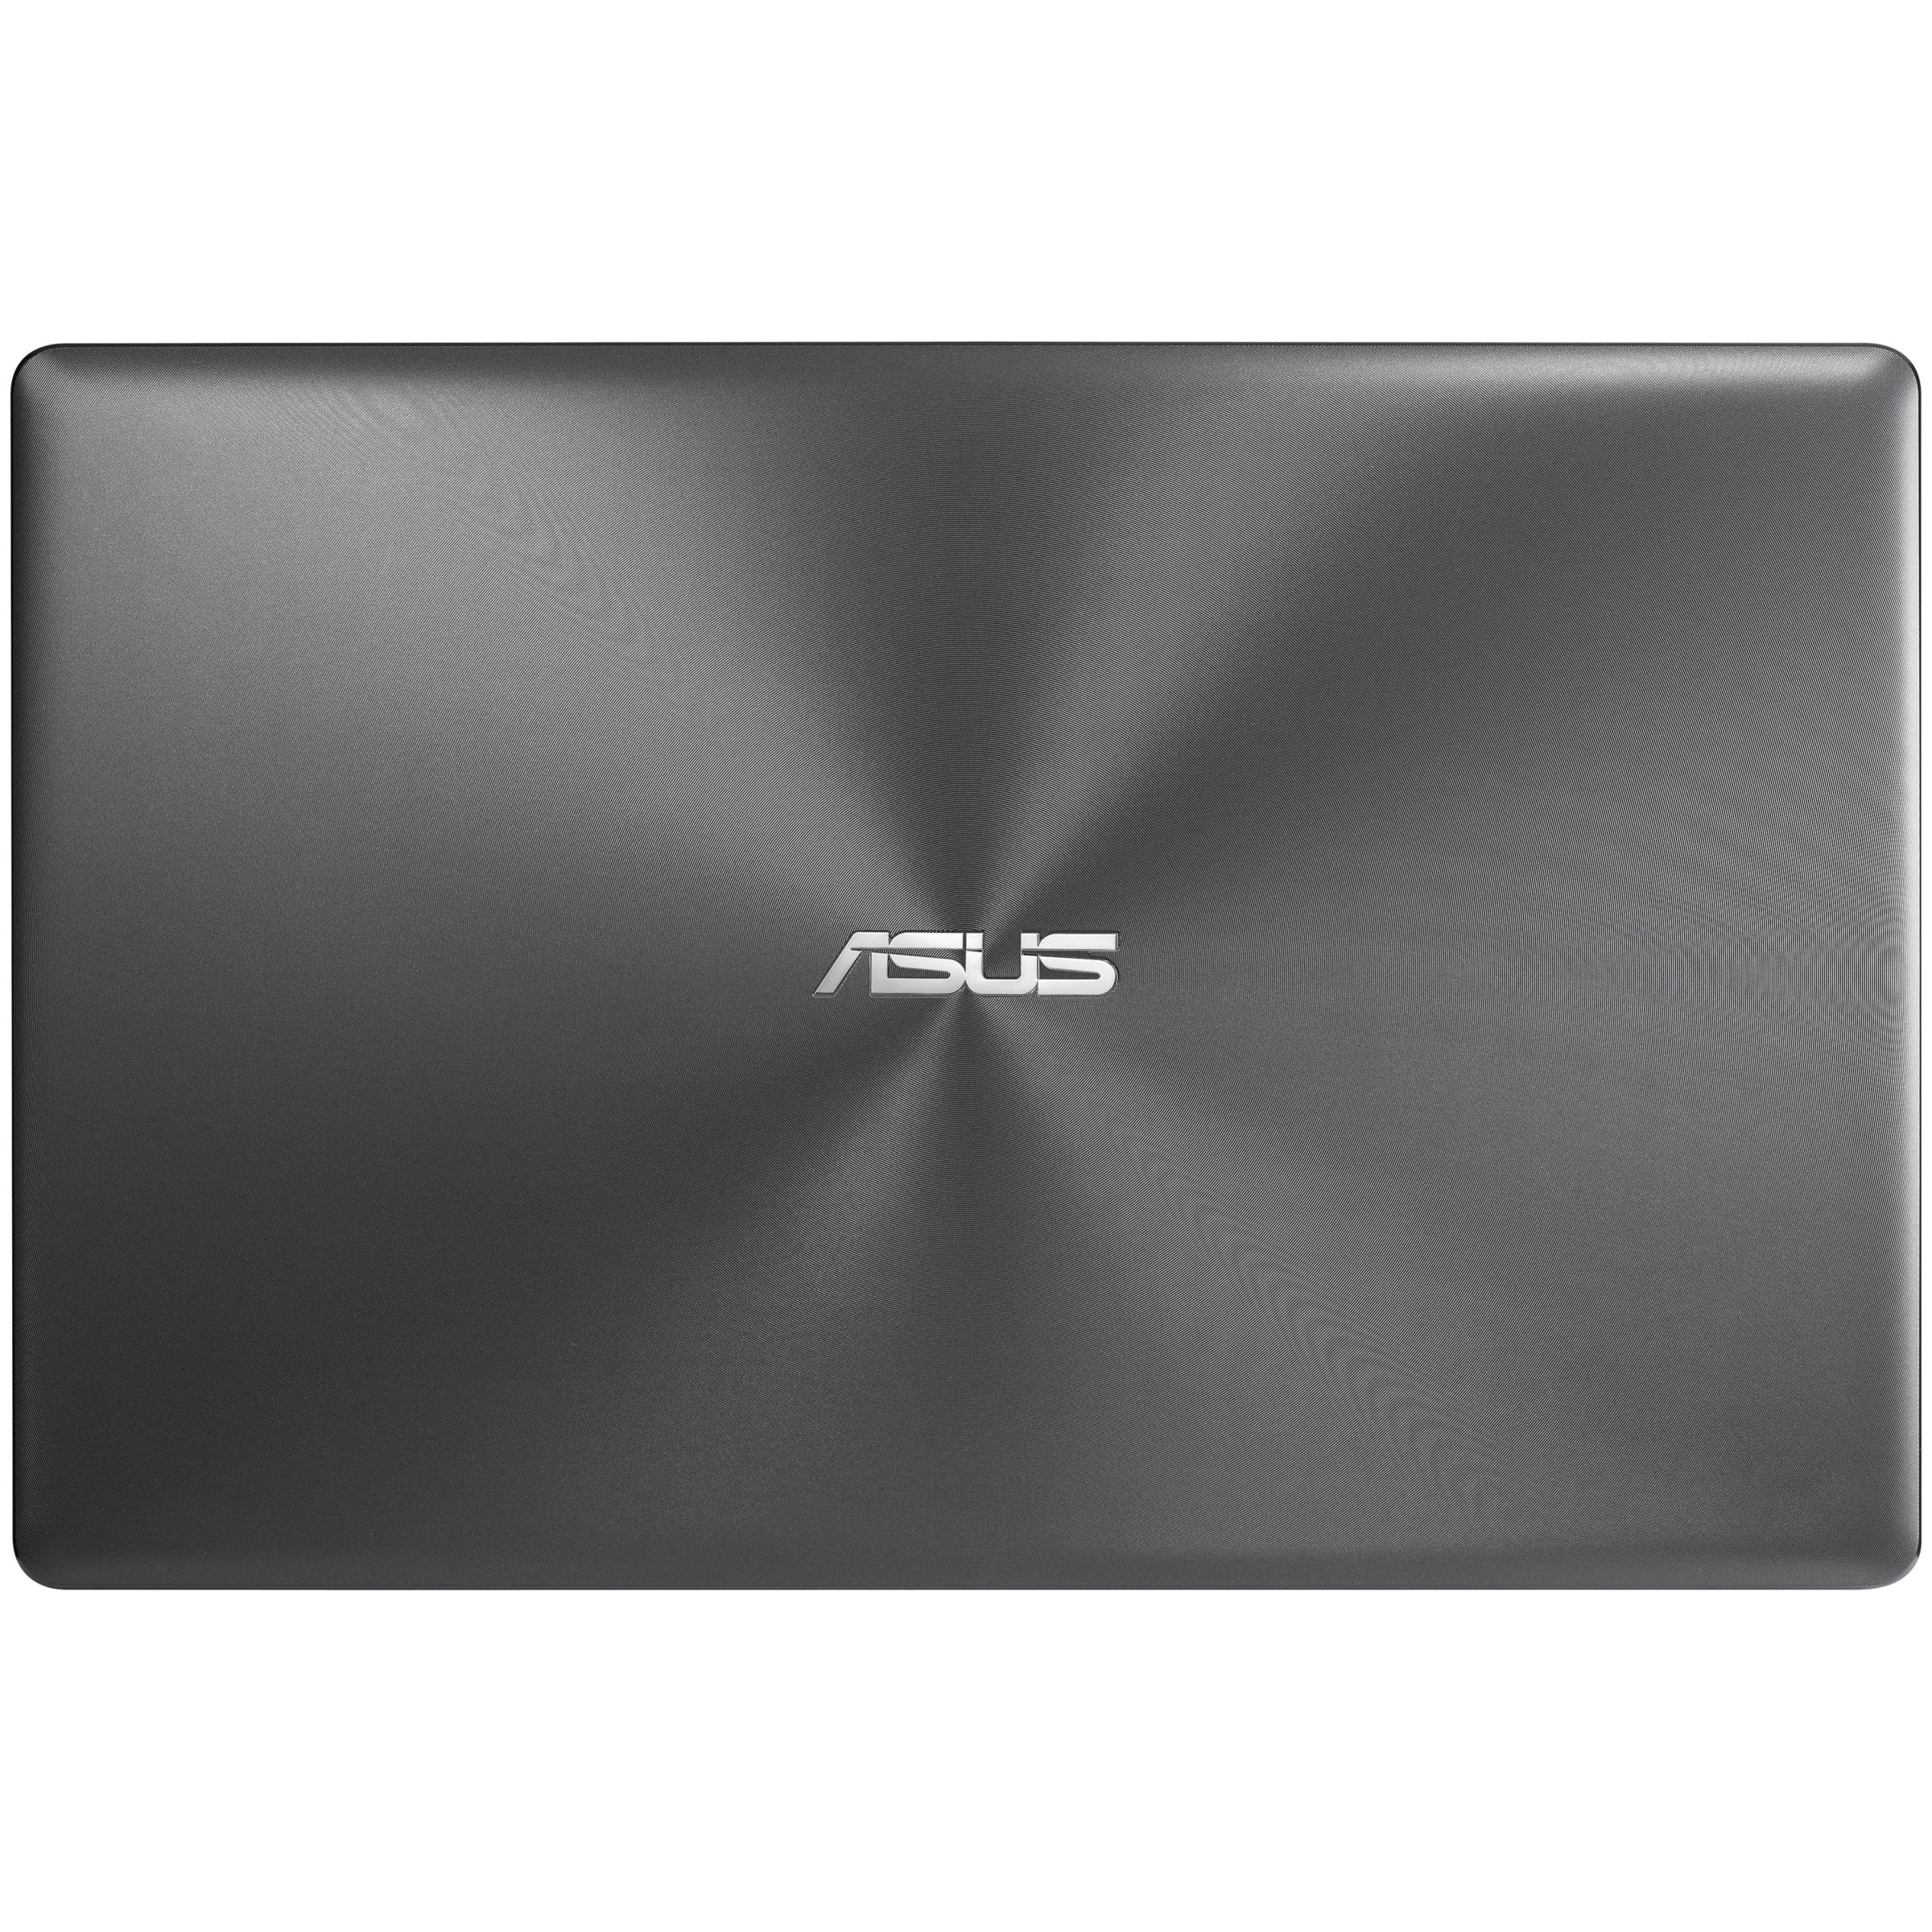 ASUS X550CA Laptop, Intel Core i5, 6GB RAM, 1TB, 15.6